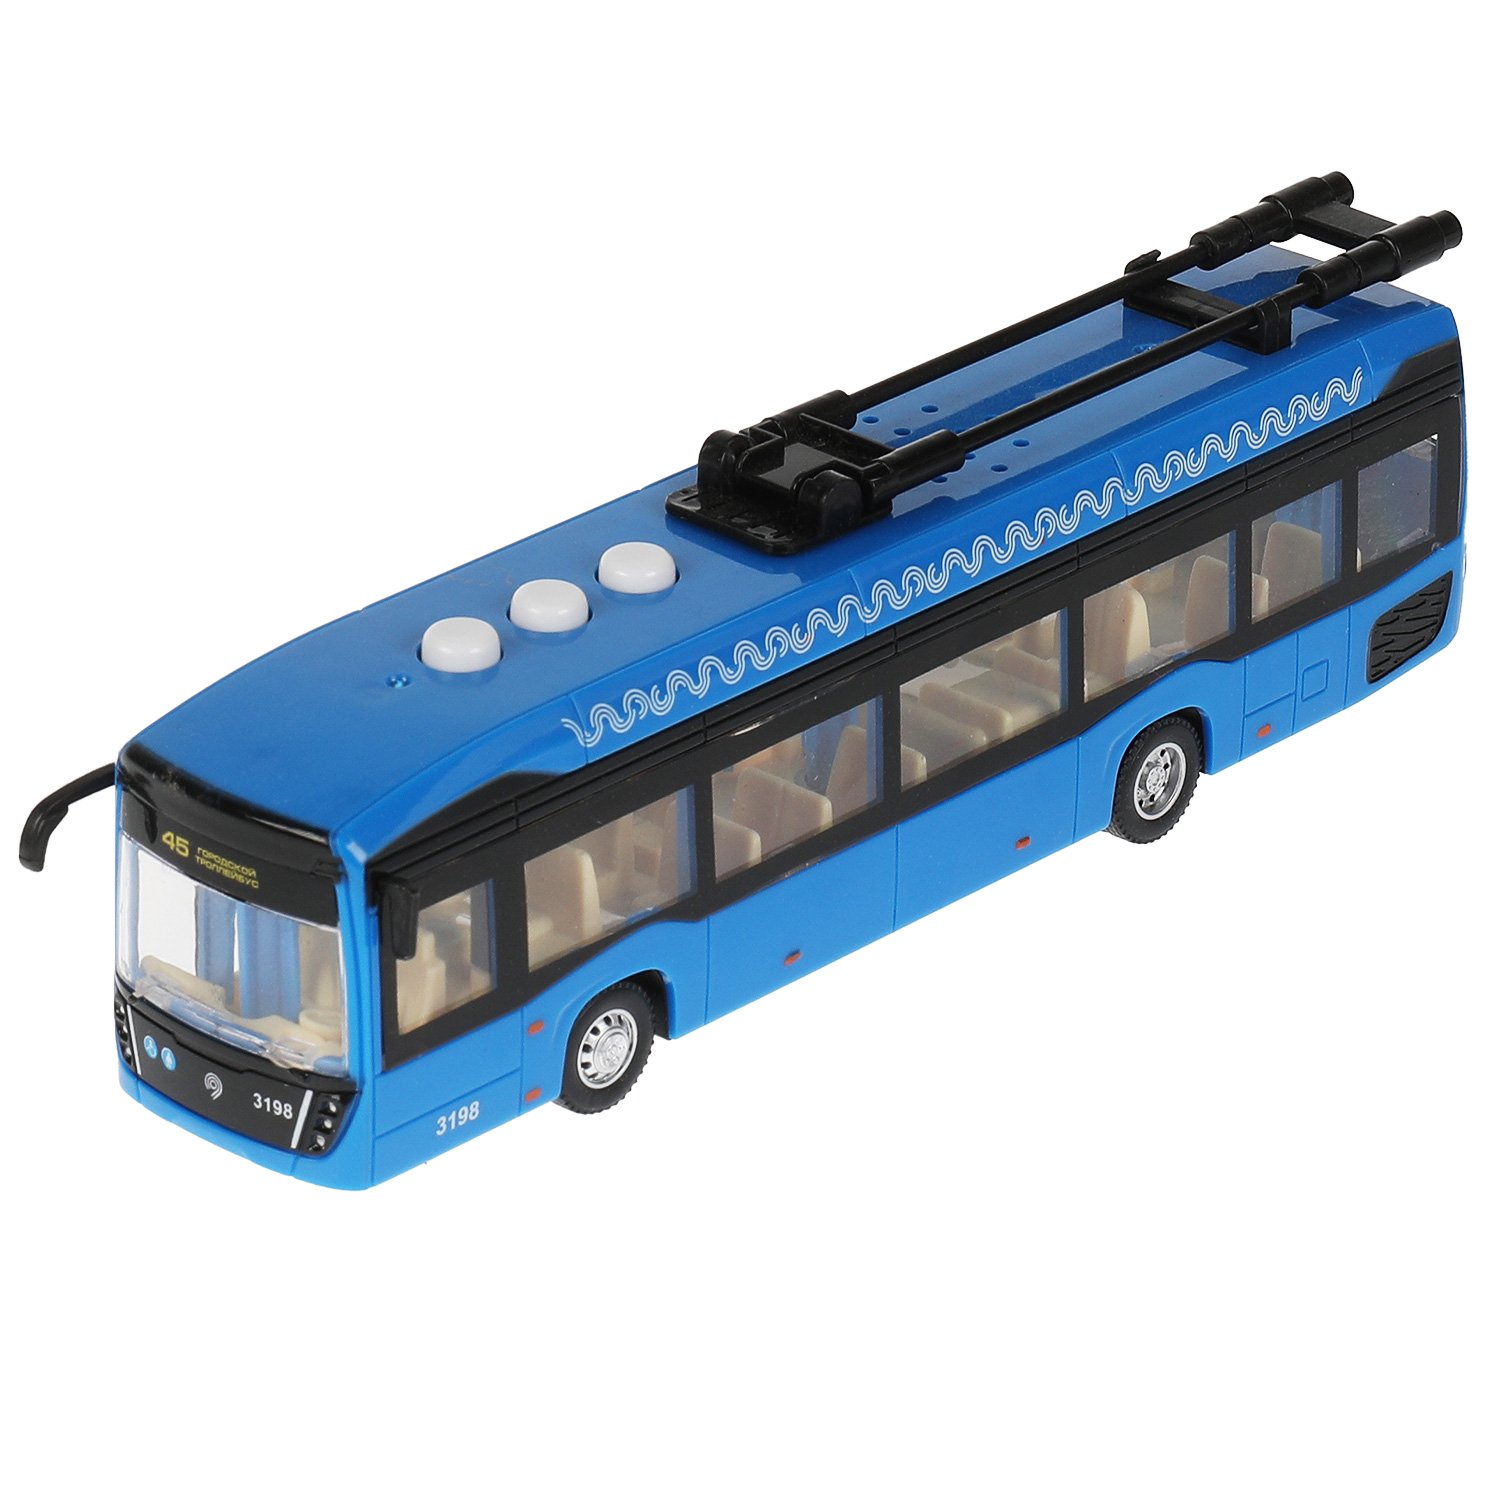 Модель Троллейбус Технопарк Метрополитен, 19 см, свет и звук, 3 кноп синий технопарк инерционная модель троллейбус